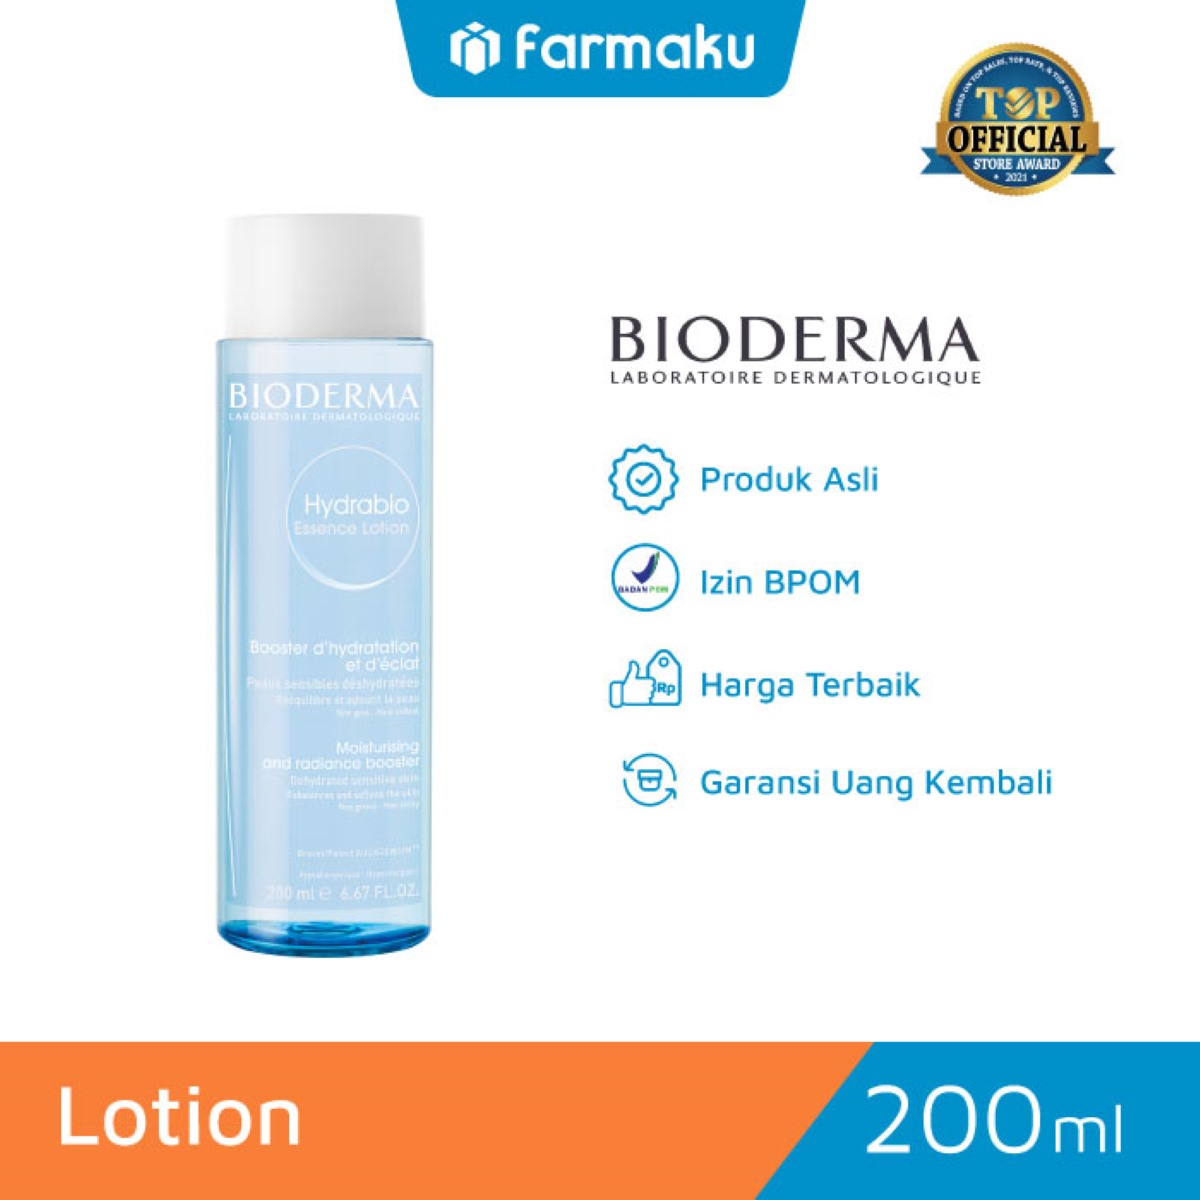 Bioderma Hydrabio Essence Lotion